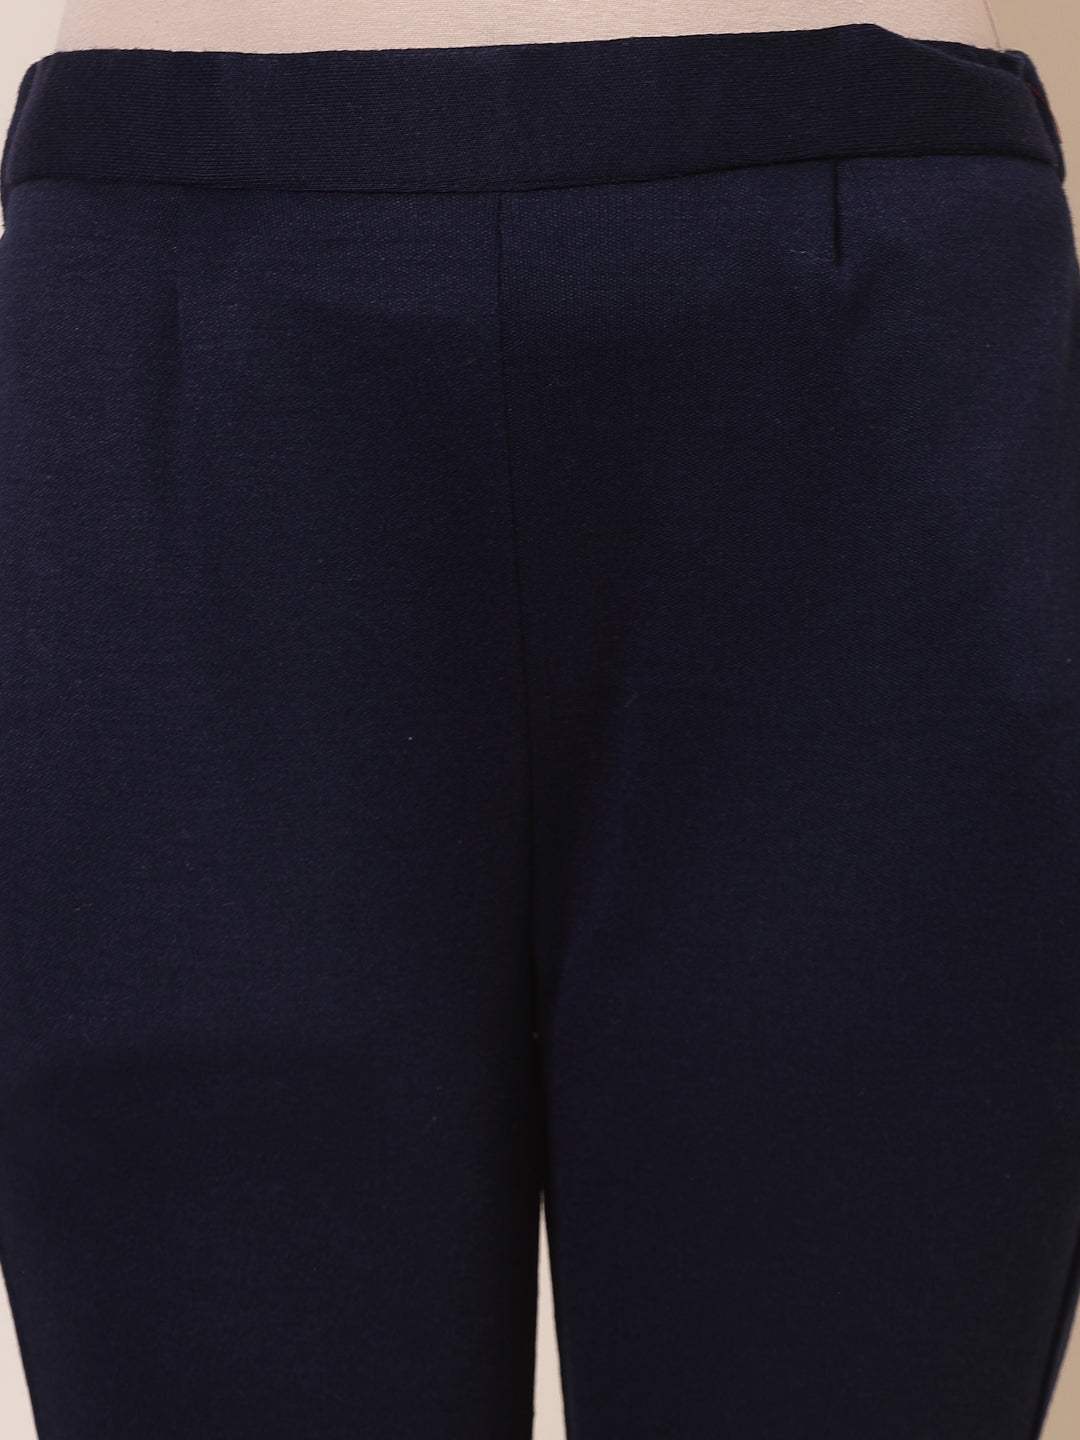 Dark Fawn & Navy Blue Solid Woollen Trouser (Pack of 2)